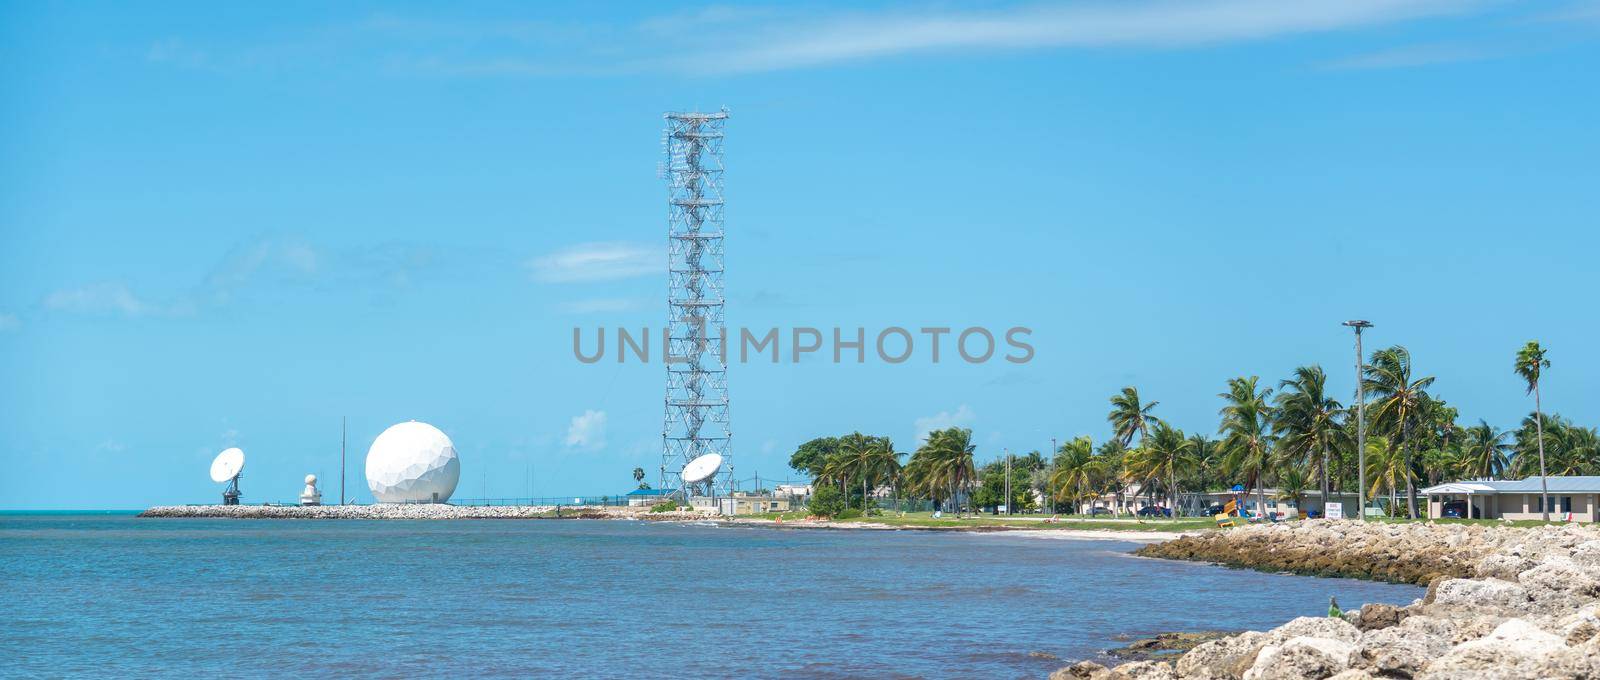 Key West, Florida, USA - September 12, 2019: Naval Air Station Key West in Key West, Florida by Mariakray